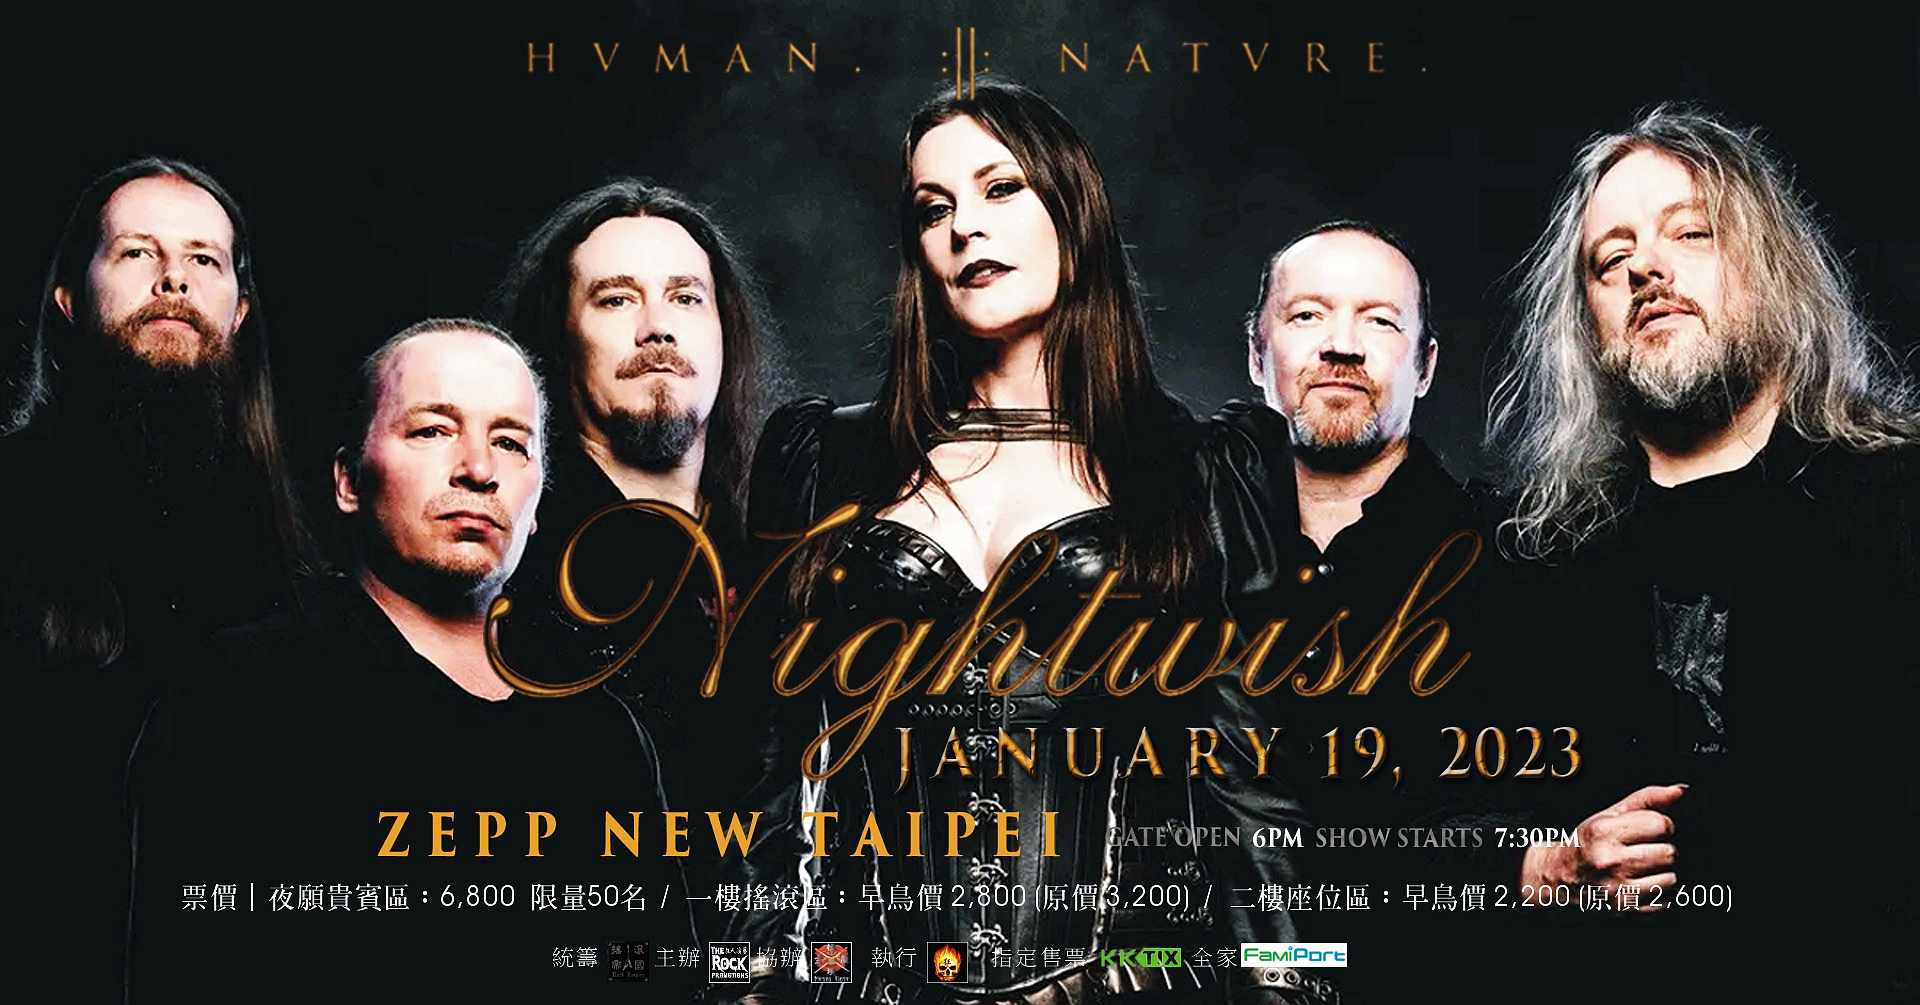 nightwish tour 2023 vorband